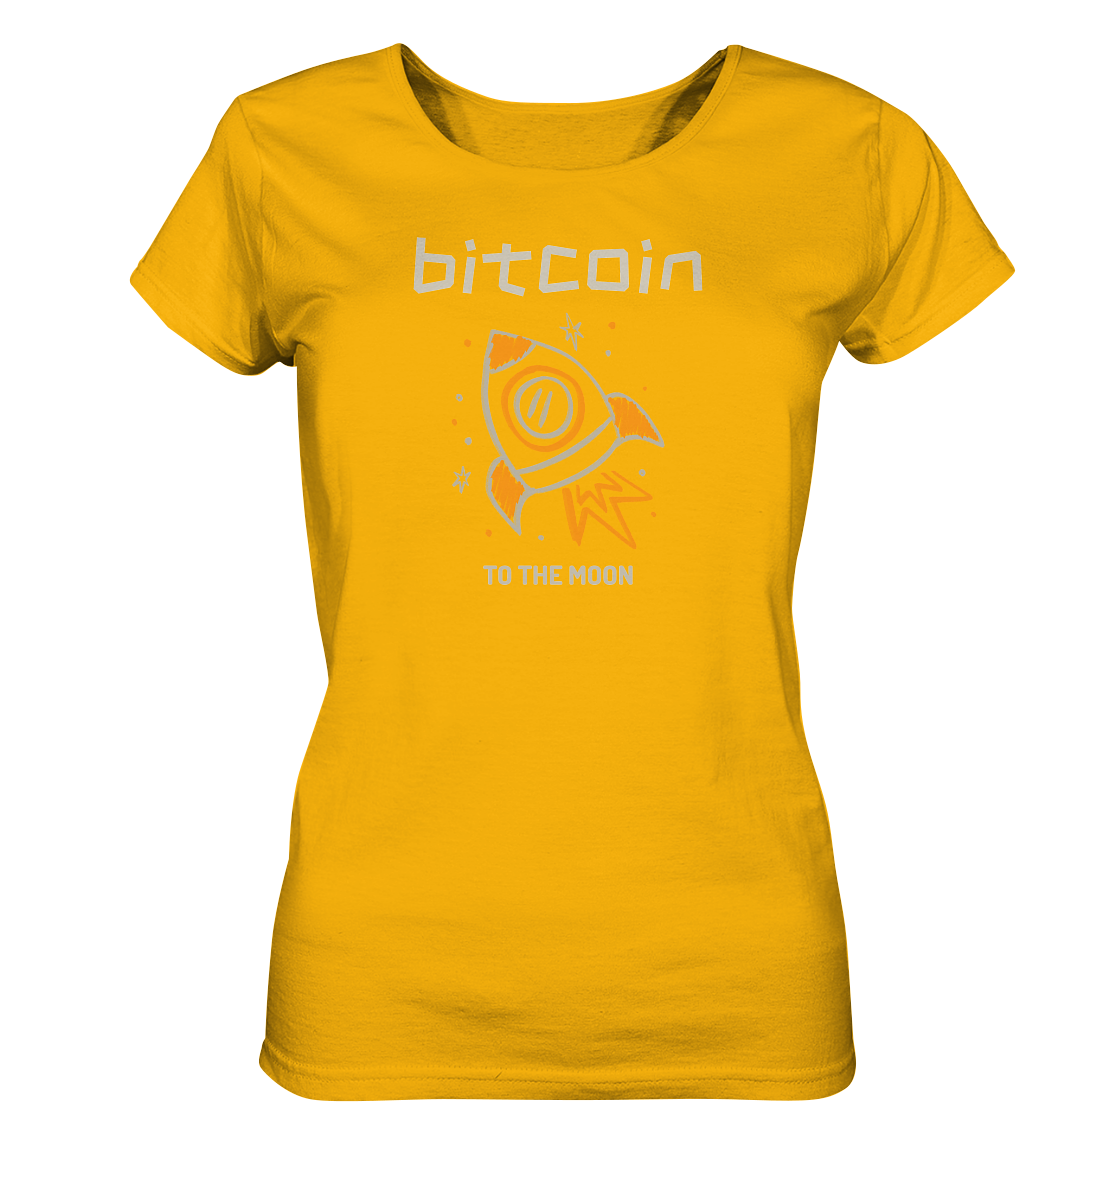 Bitcoin to the moon - Ladies Organic Shirt